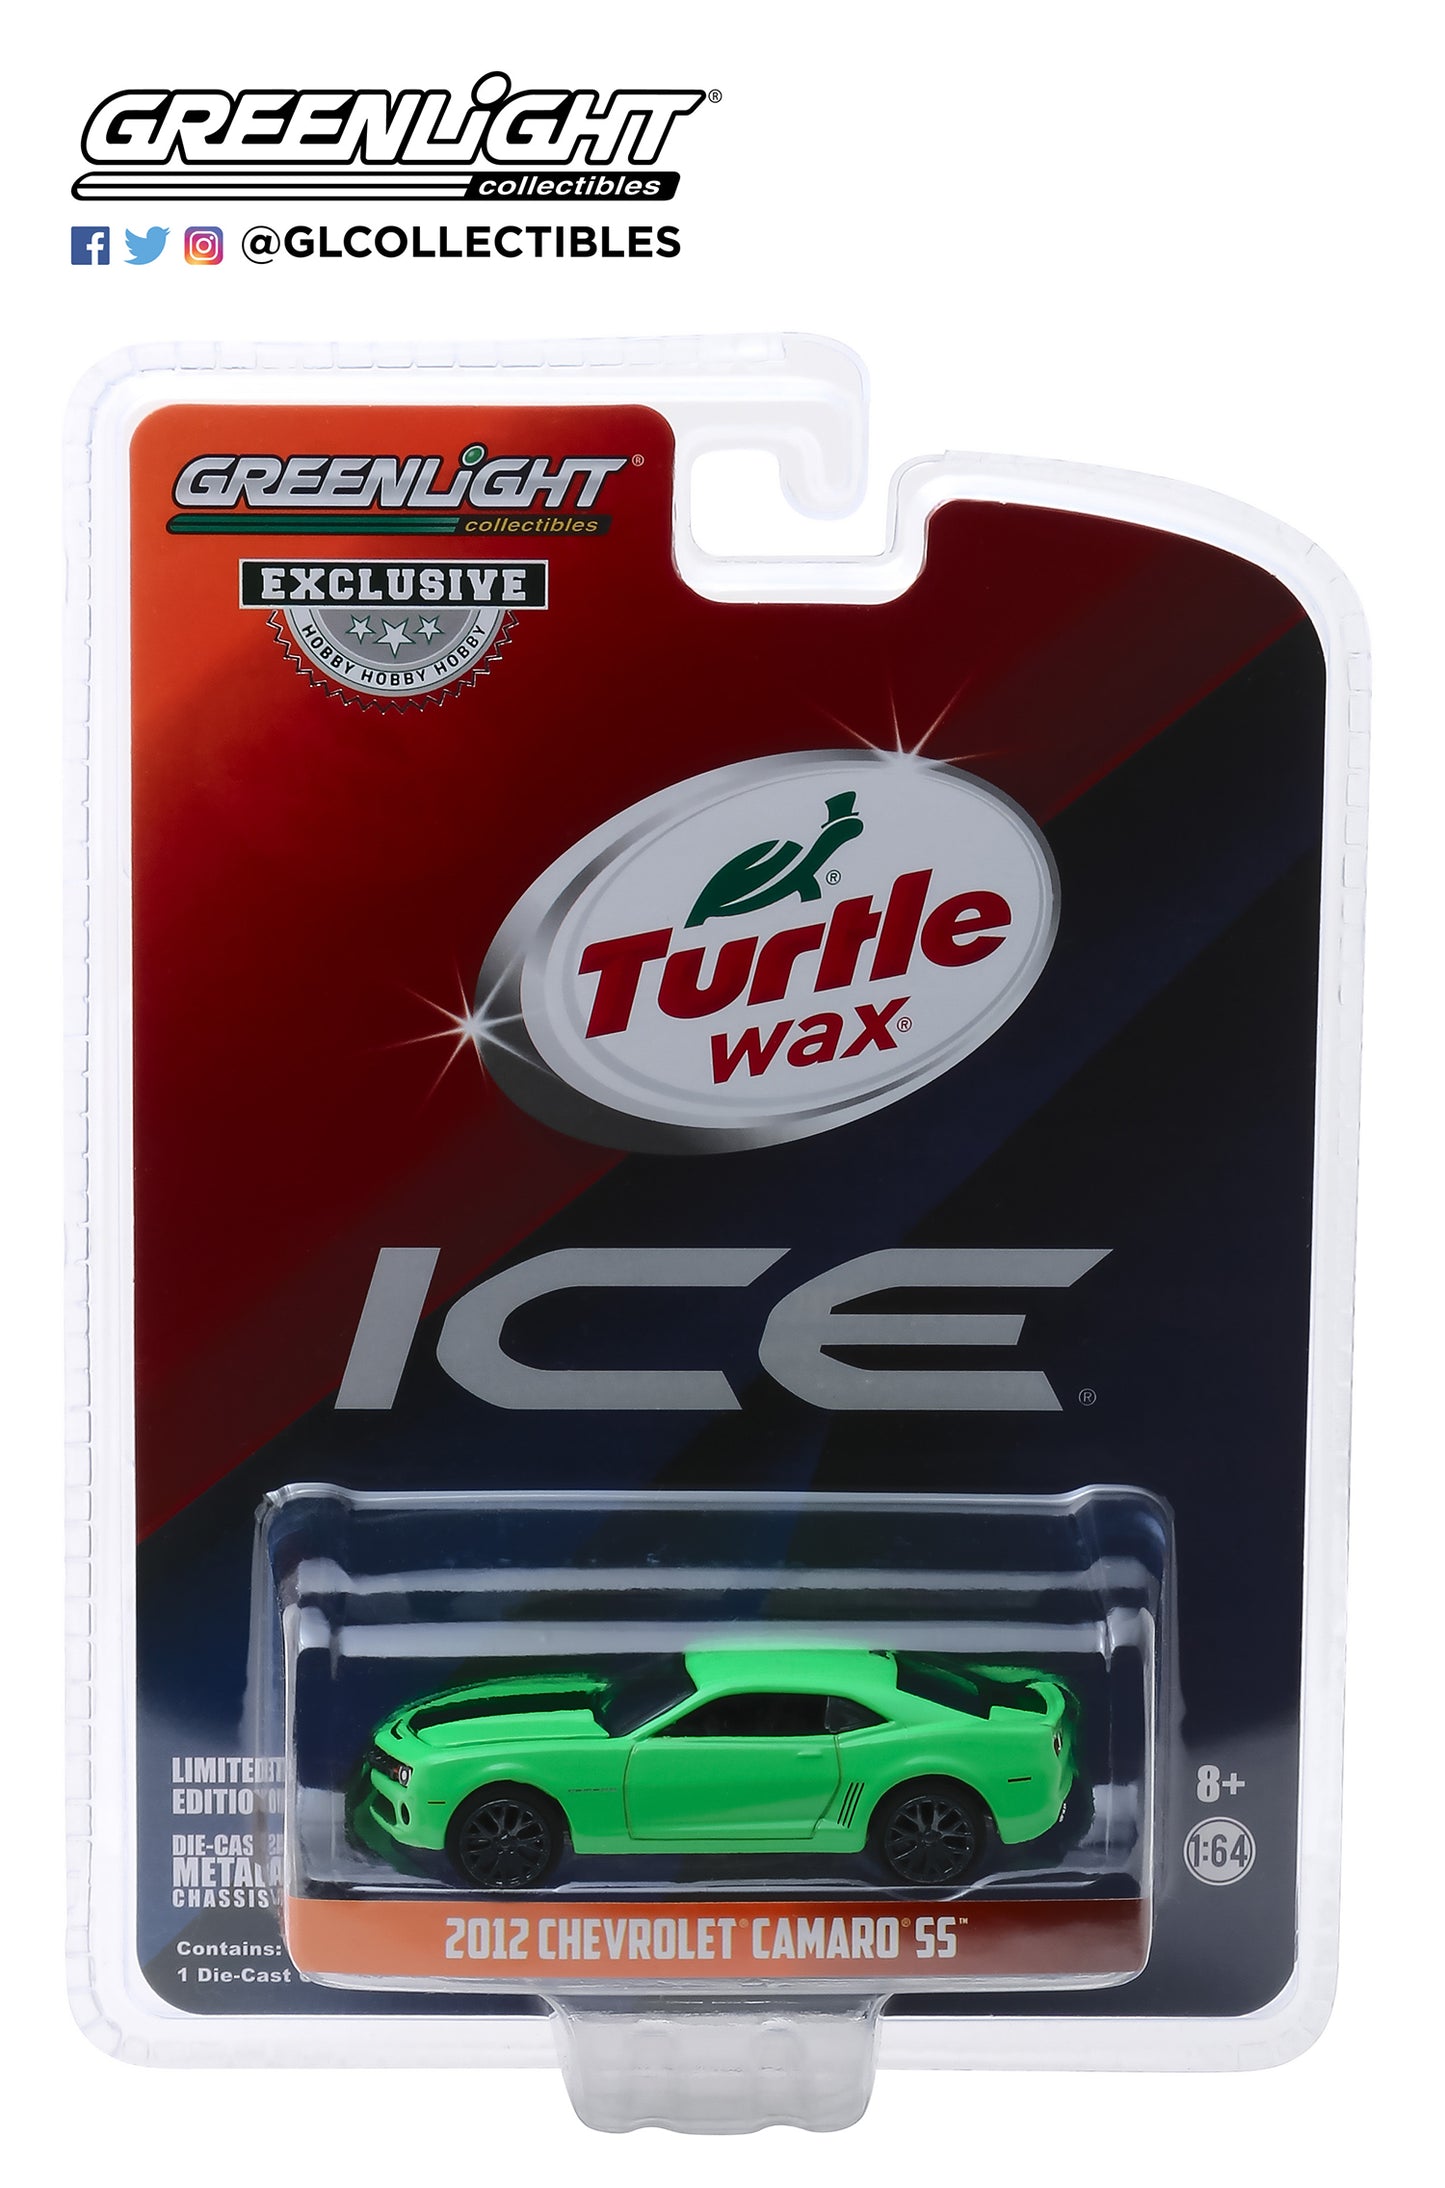 GreenLight 1/64 Turtle Wax Ad Cars - 2012 Chevrolet Camaro SS - Turtle Wax Ice Smart Shield Technology 30019